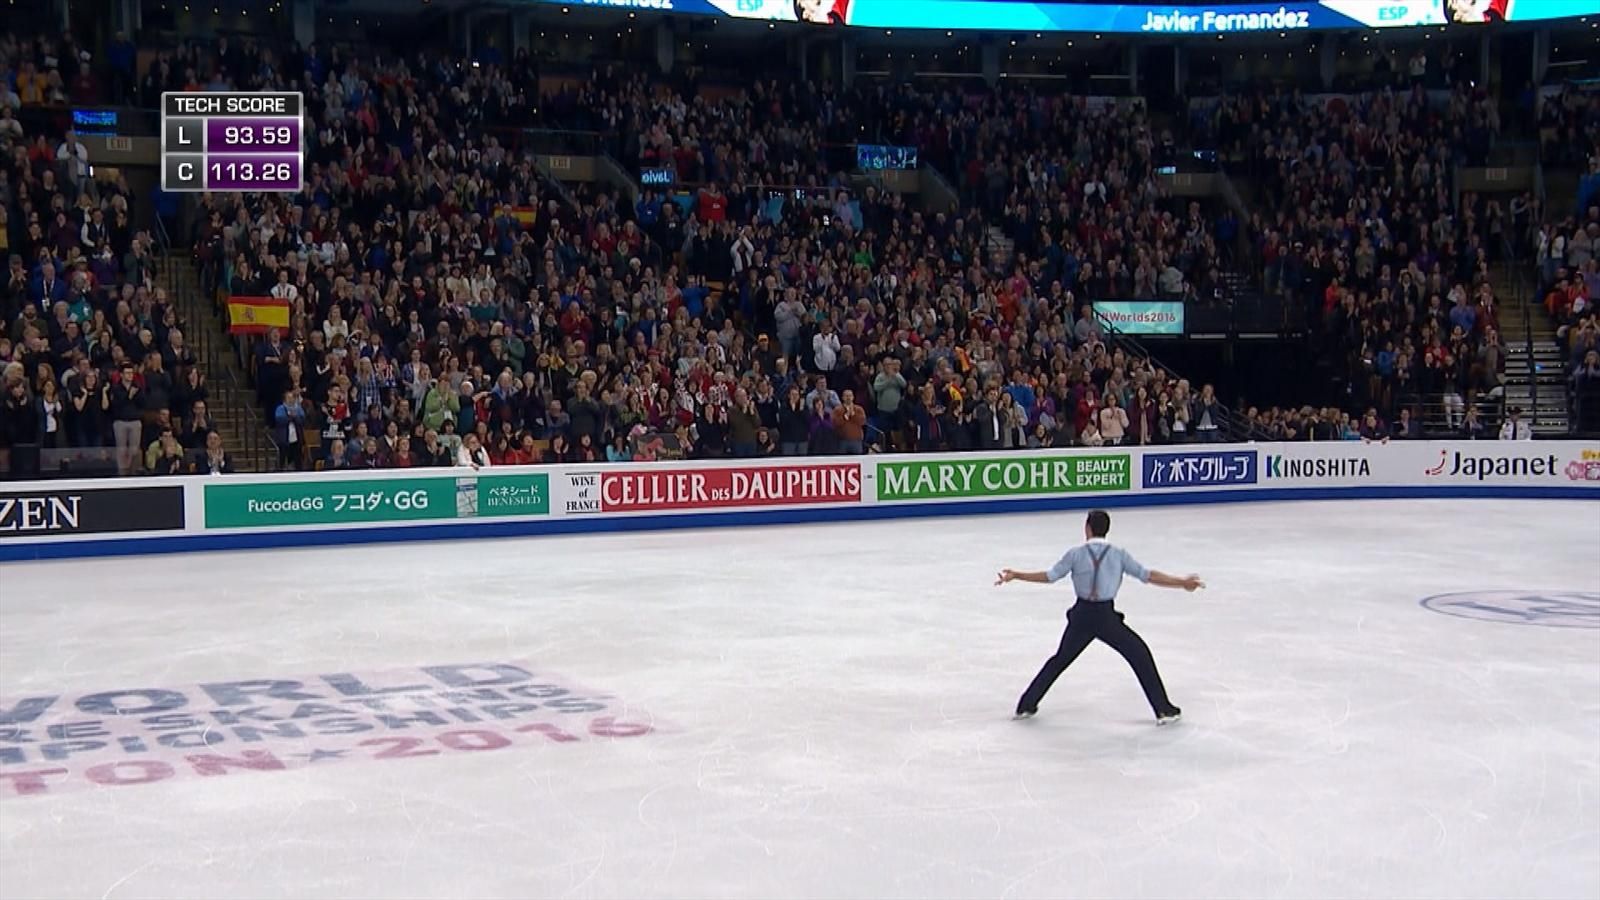 Video Javier Fernandez Pulls Off Spectacular Skate To